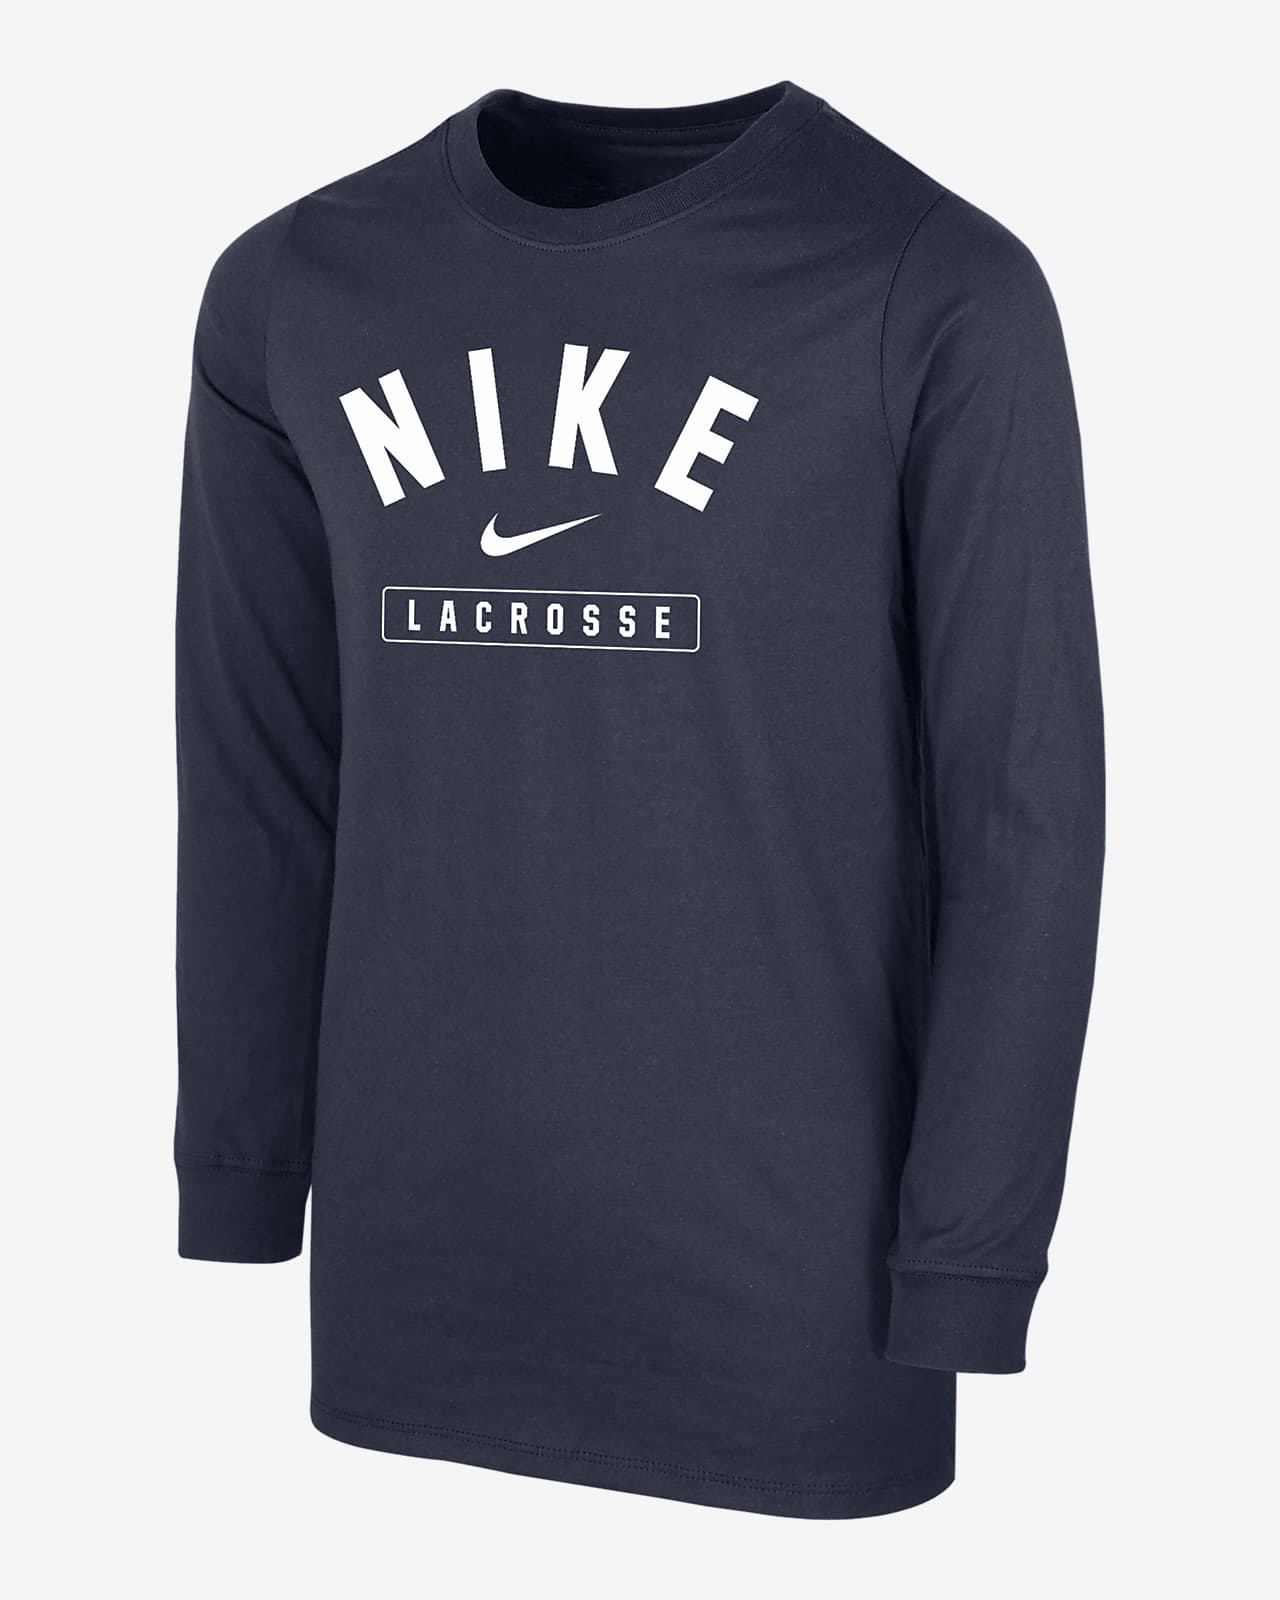 Nike Lacrosse Big Kids' (Boys') Long-Sleeve T-Shirt